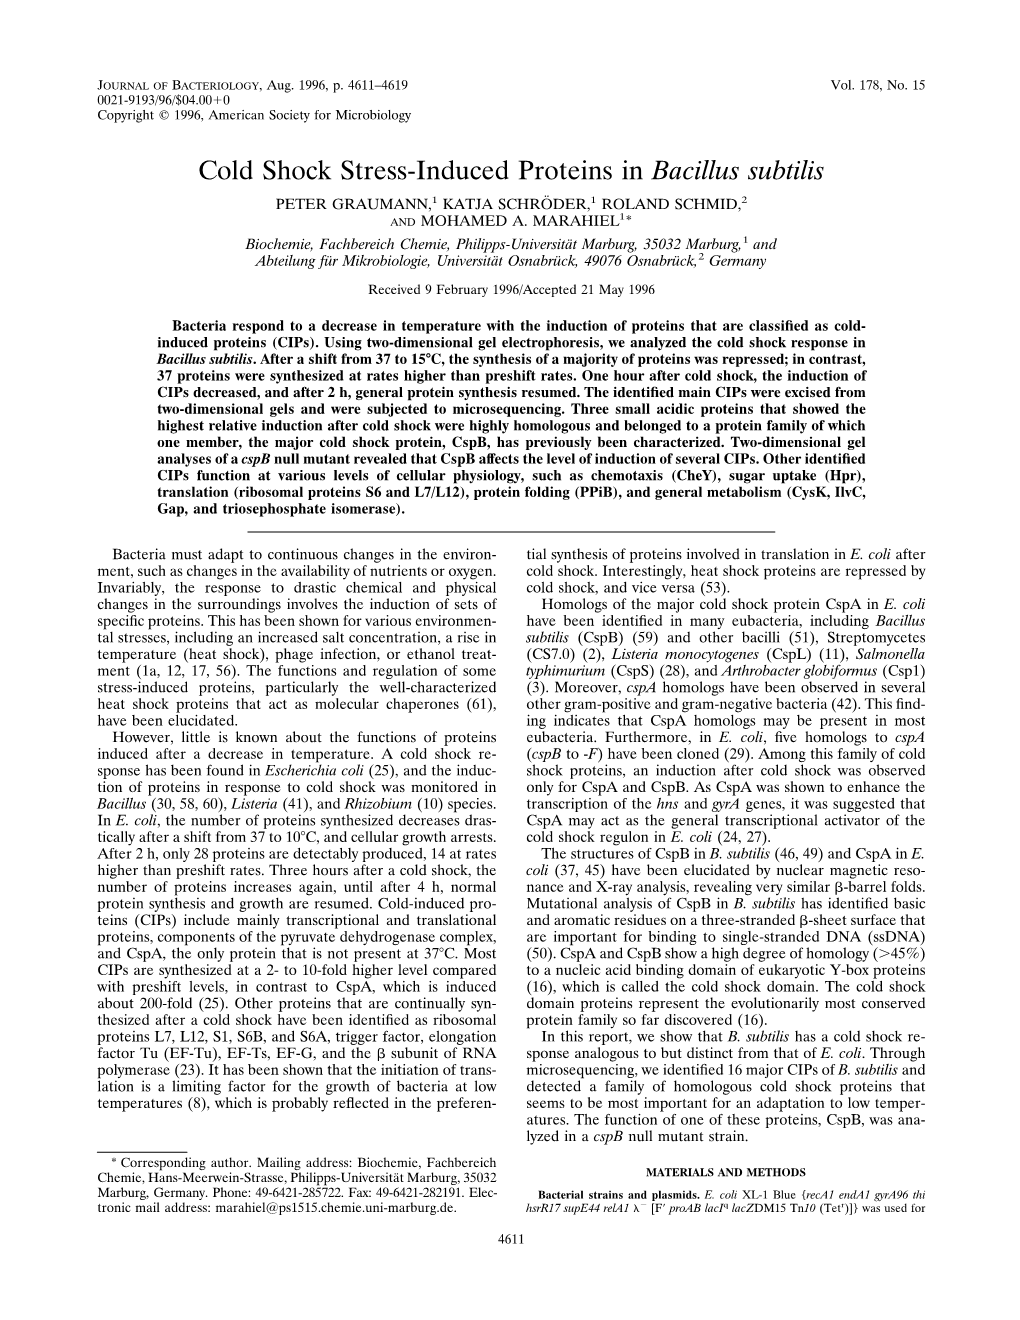 Cold Shock Stress-Induced Proteins in Bacillus Subtilis PETER GRAUMANN,1 KATJA SCHRO¨ DER,1 ROLAND SCHMID,2 1 and MOHAMED A